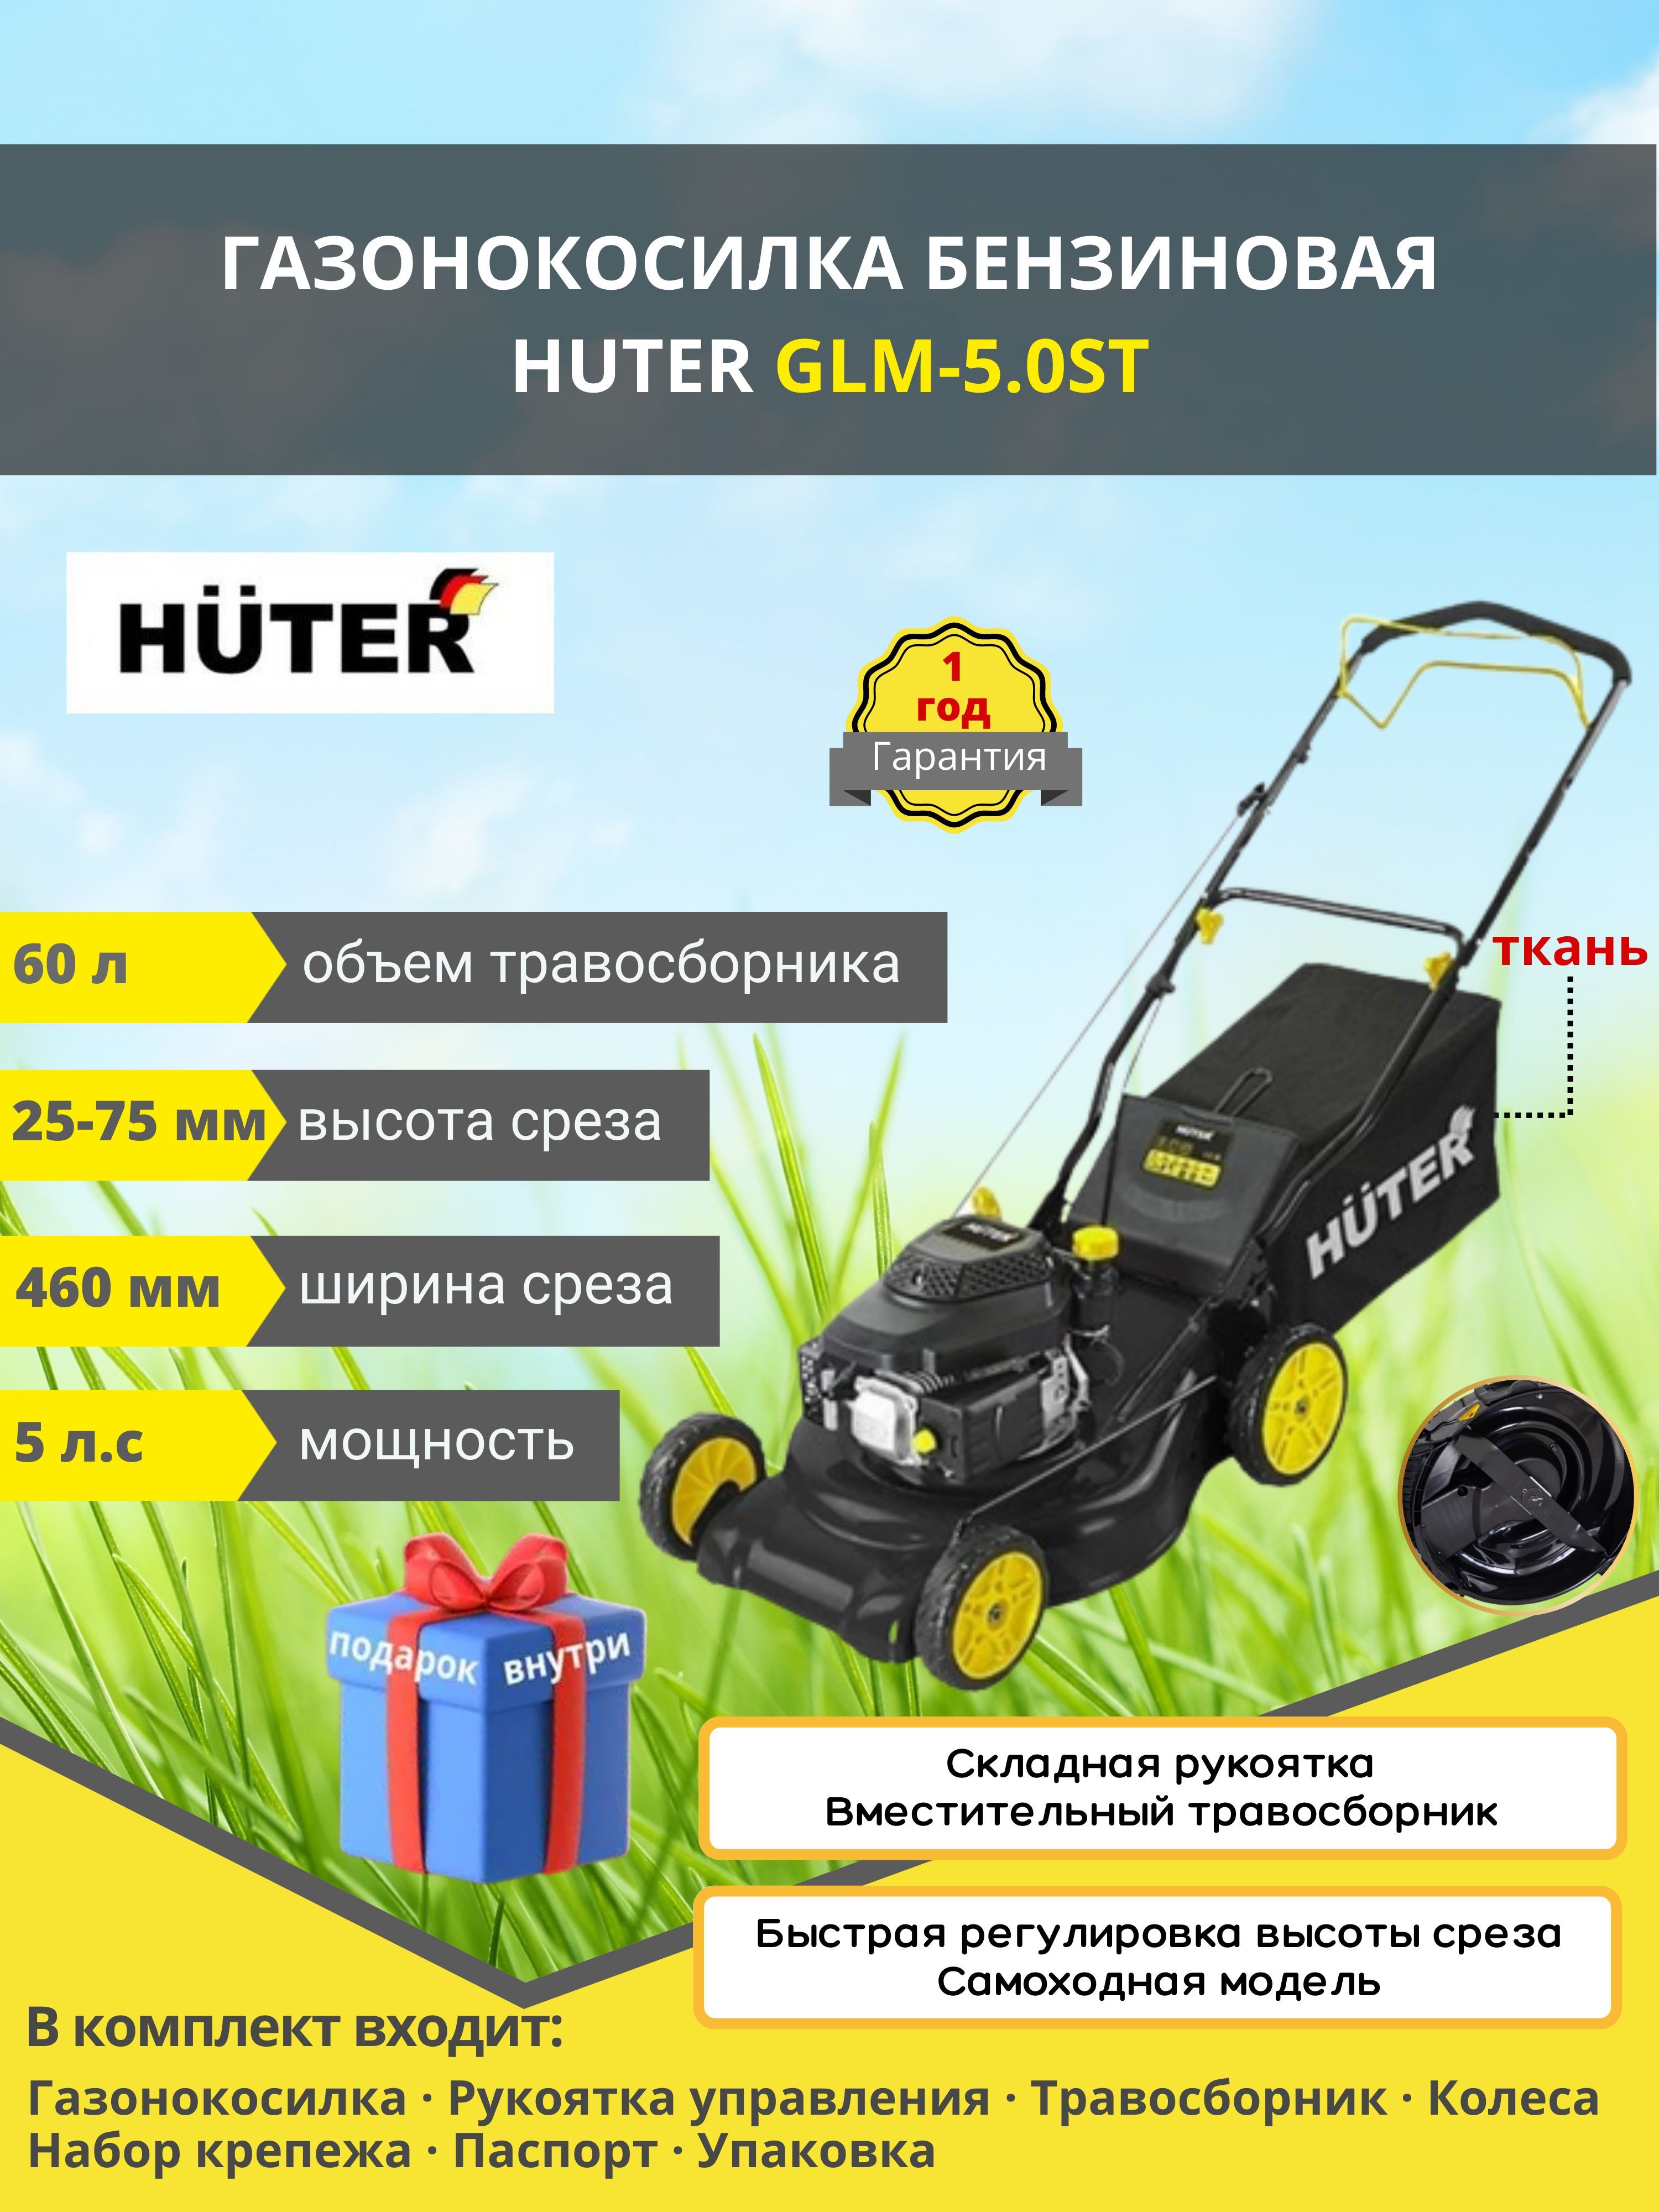 Huter GLM-5.0 St. GLM-5.0 St. Колесо для газонокосилки Huter GLM-5.0St. Huter GLM-5.0 St, 5 л.с., 46 см цены.